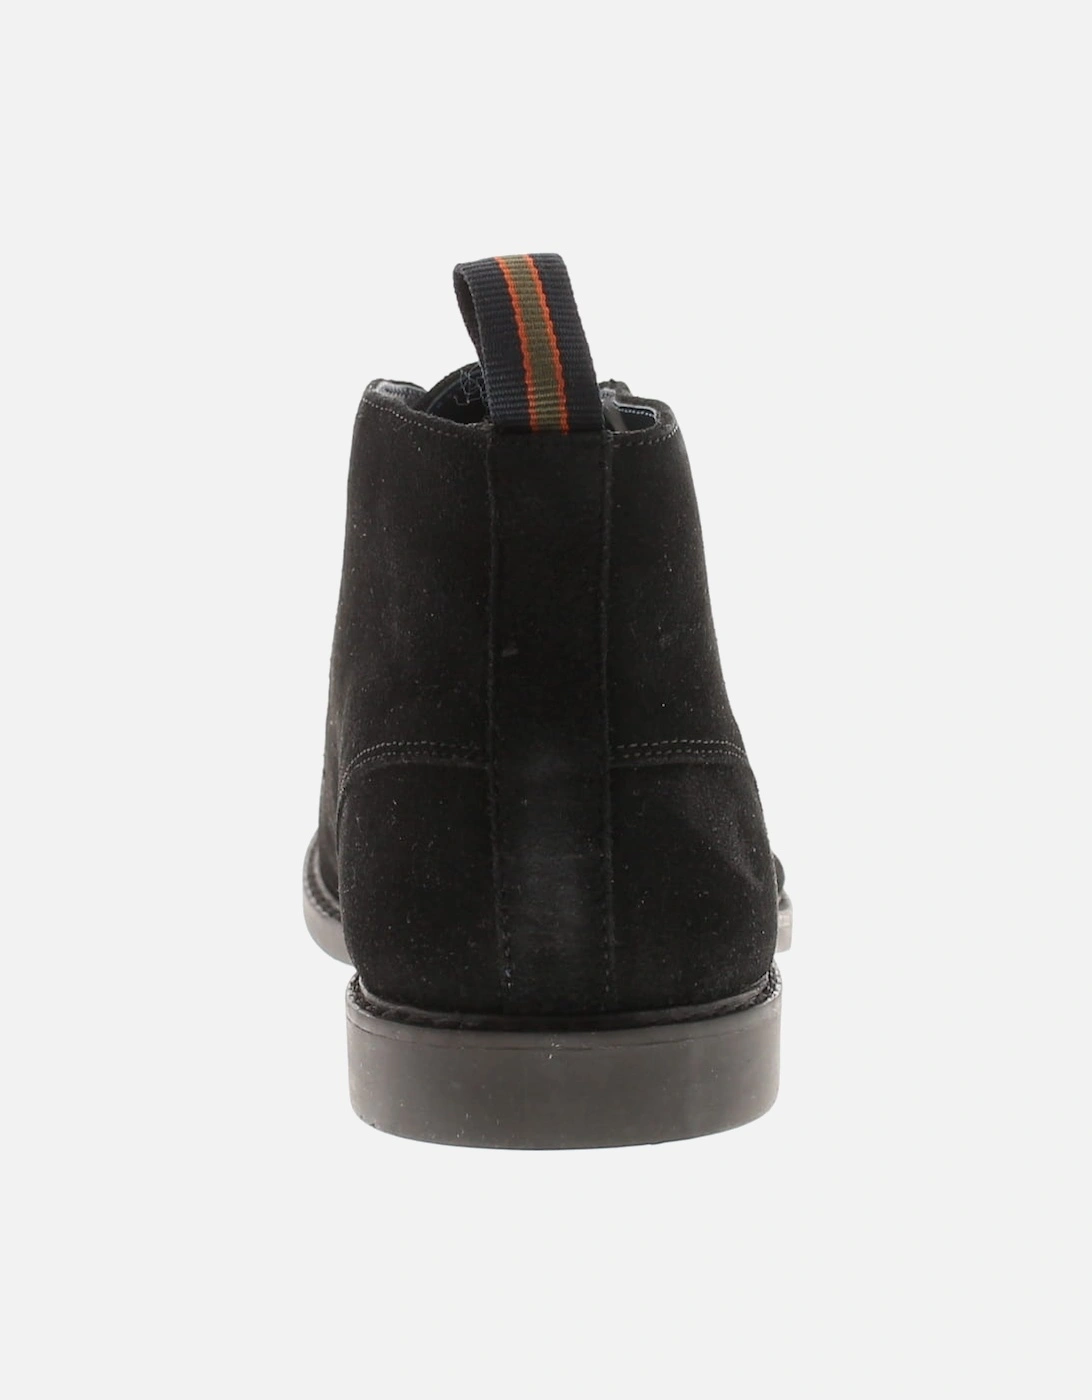 Mens Desert Boots Chukka Henry Suede Leather Memory Foam black UK Size